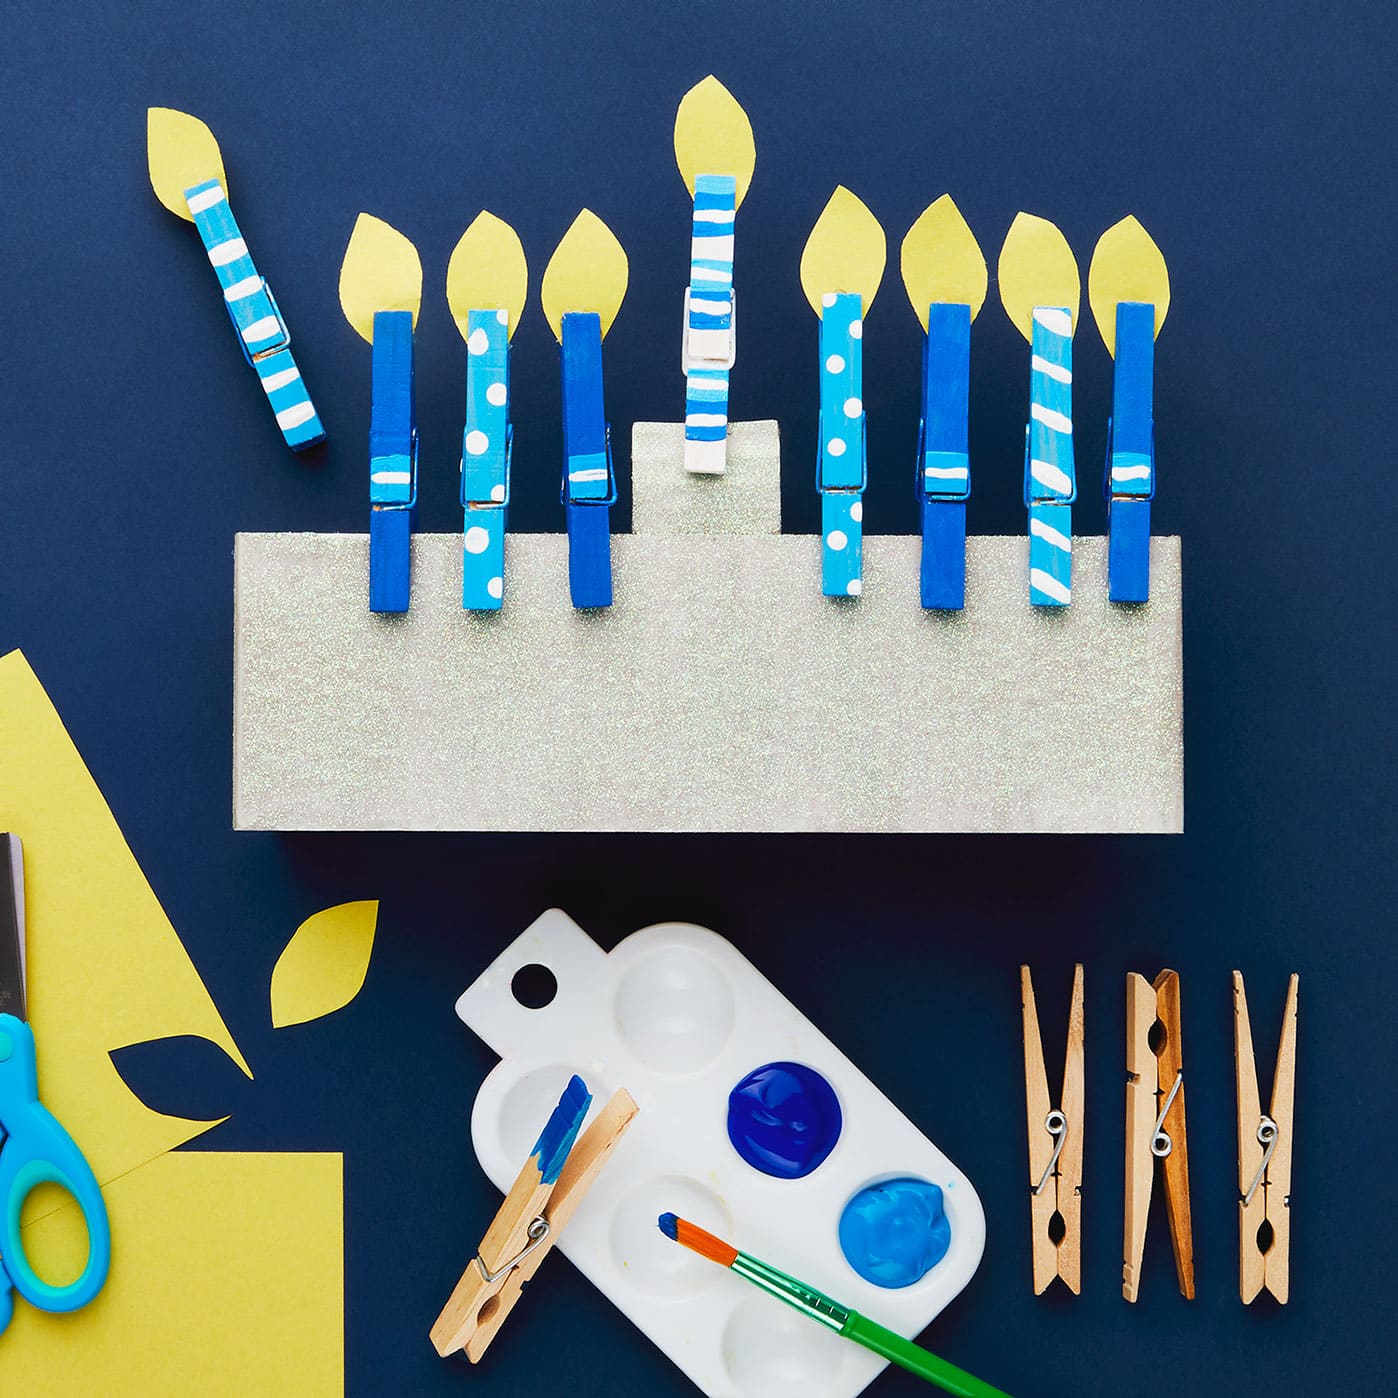 Chanukah Beeswax Candle Making Kit - Makes 9 Candles, Hanukkah Arts and  Craft Project